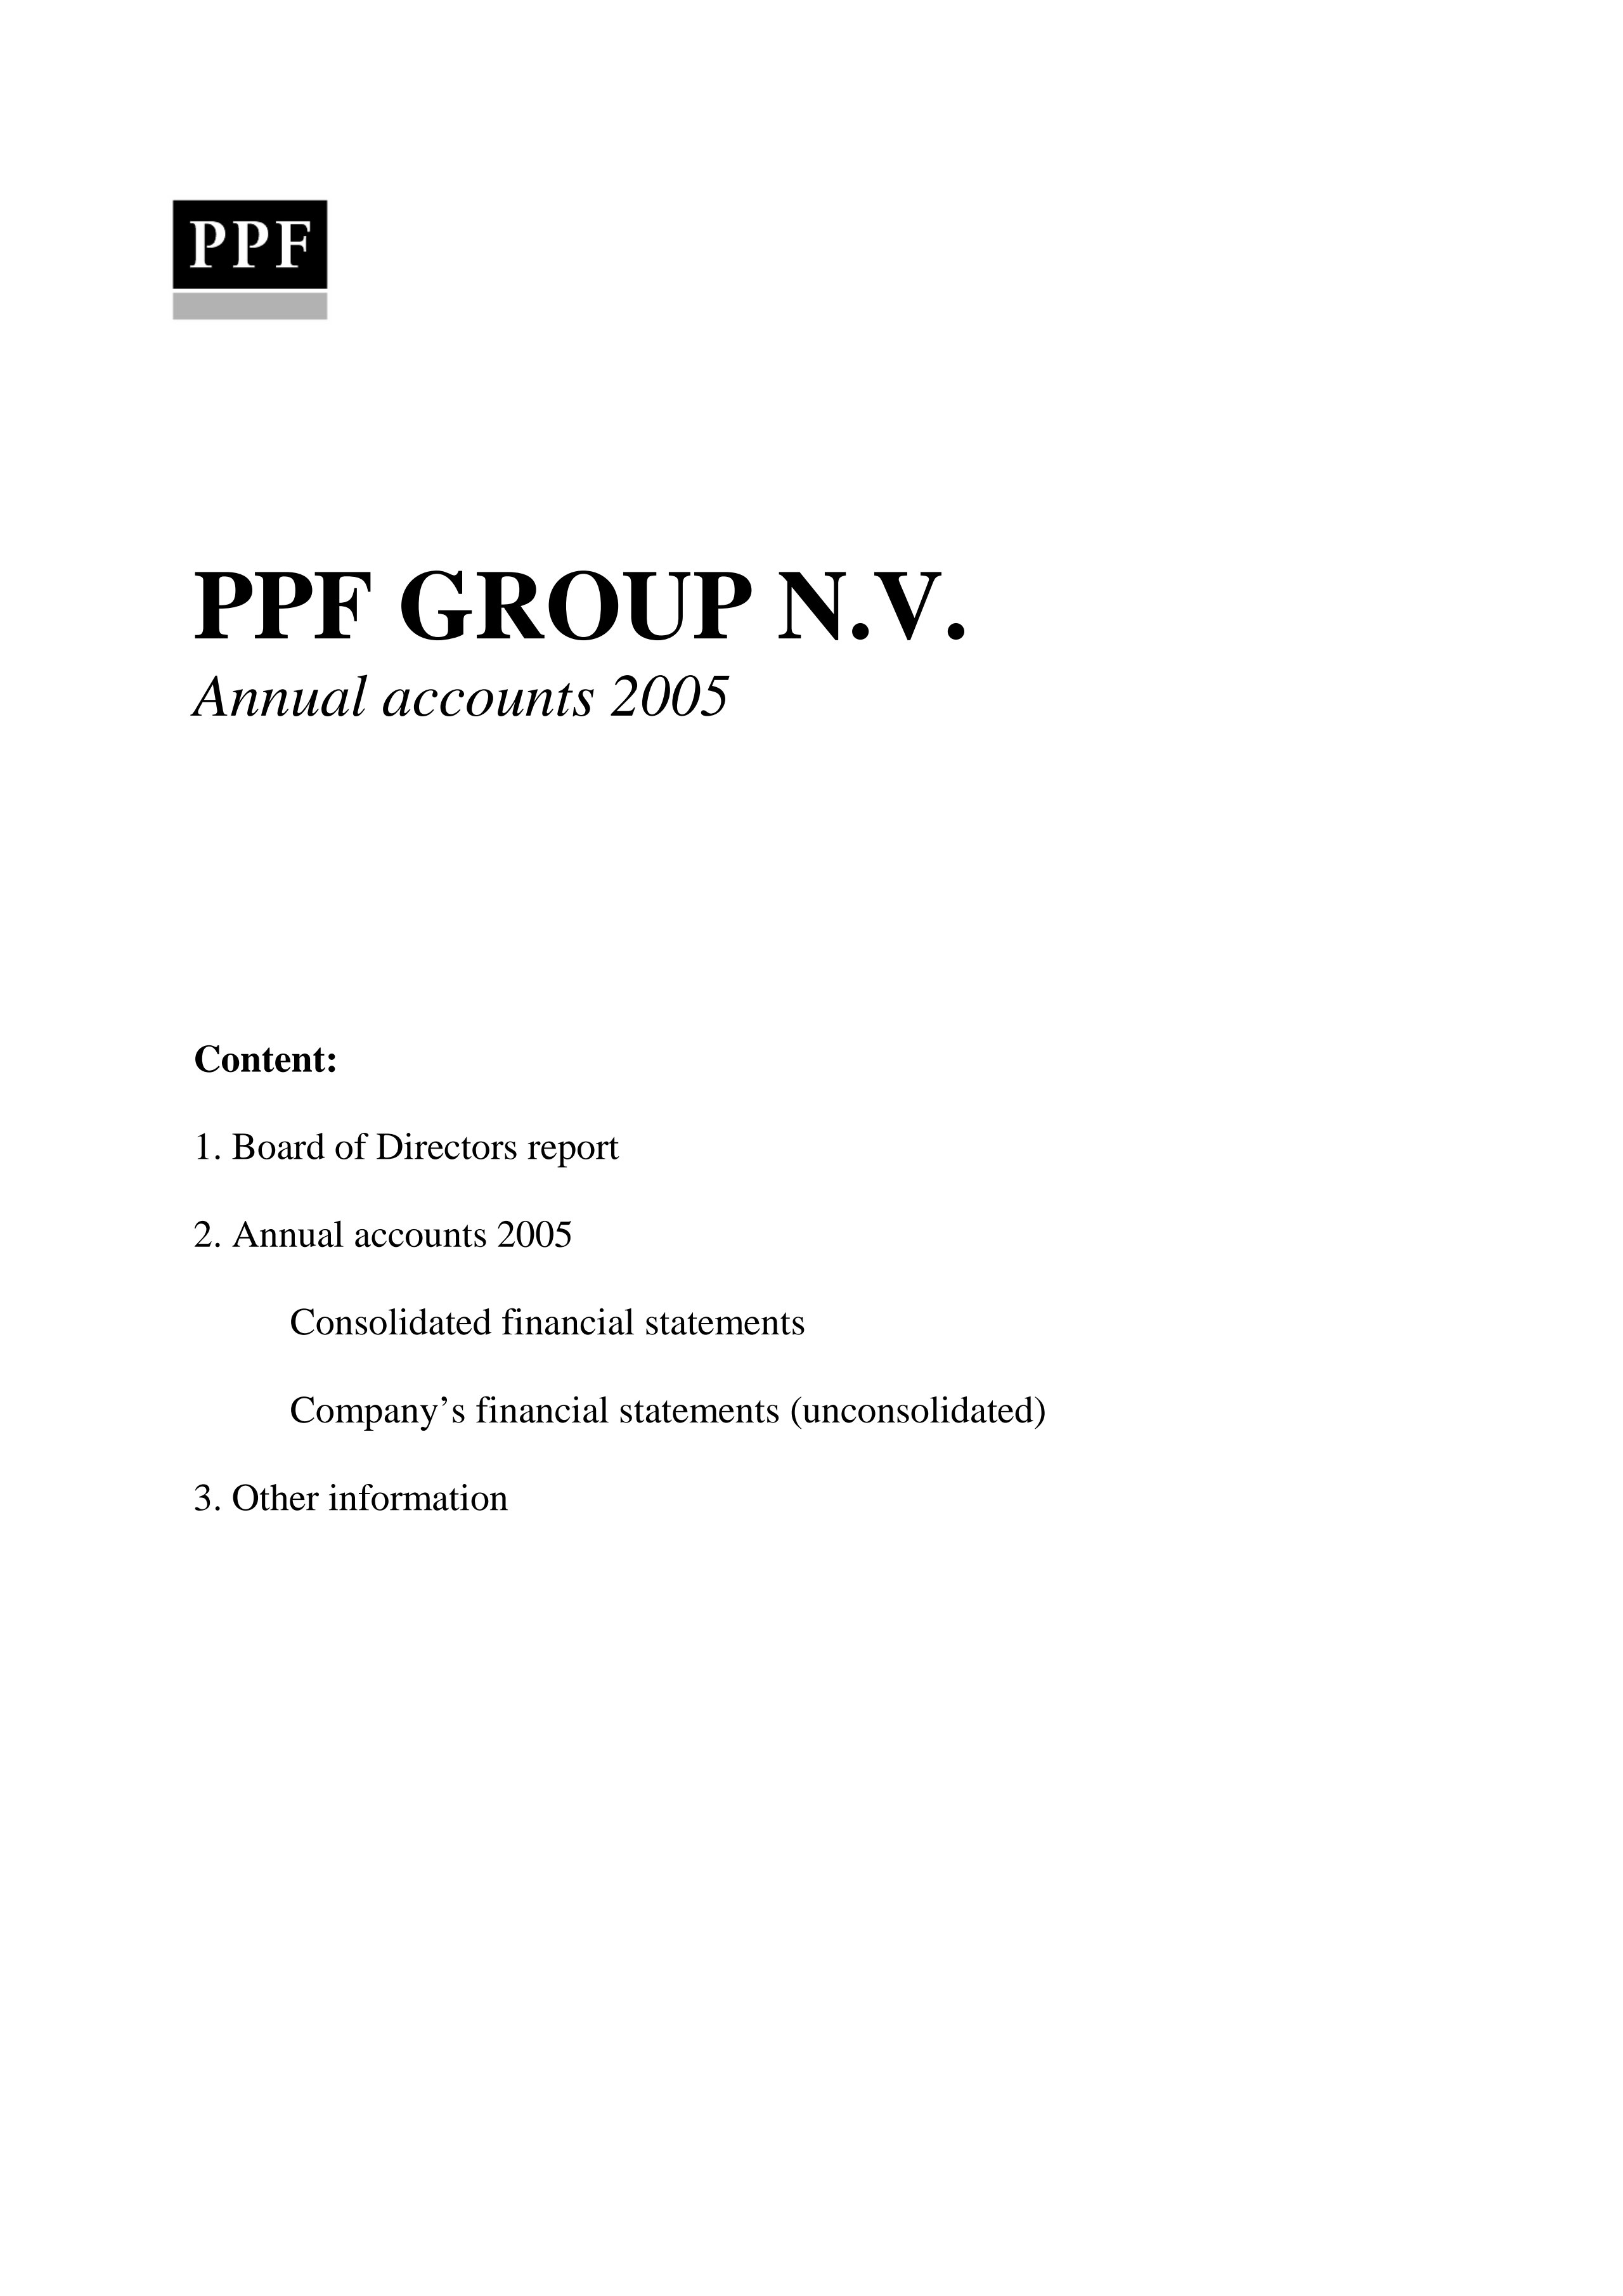 Annual Accounts PPF Group N.V. 2005 (30/10/2005)